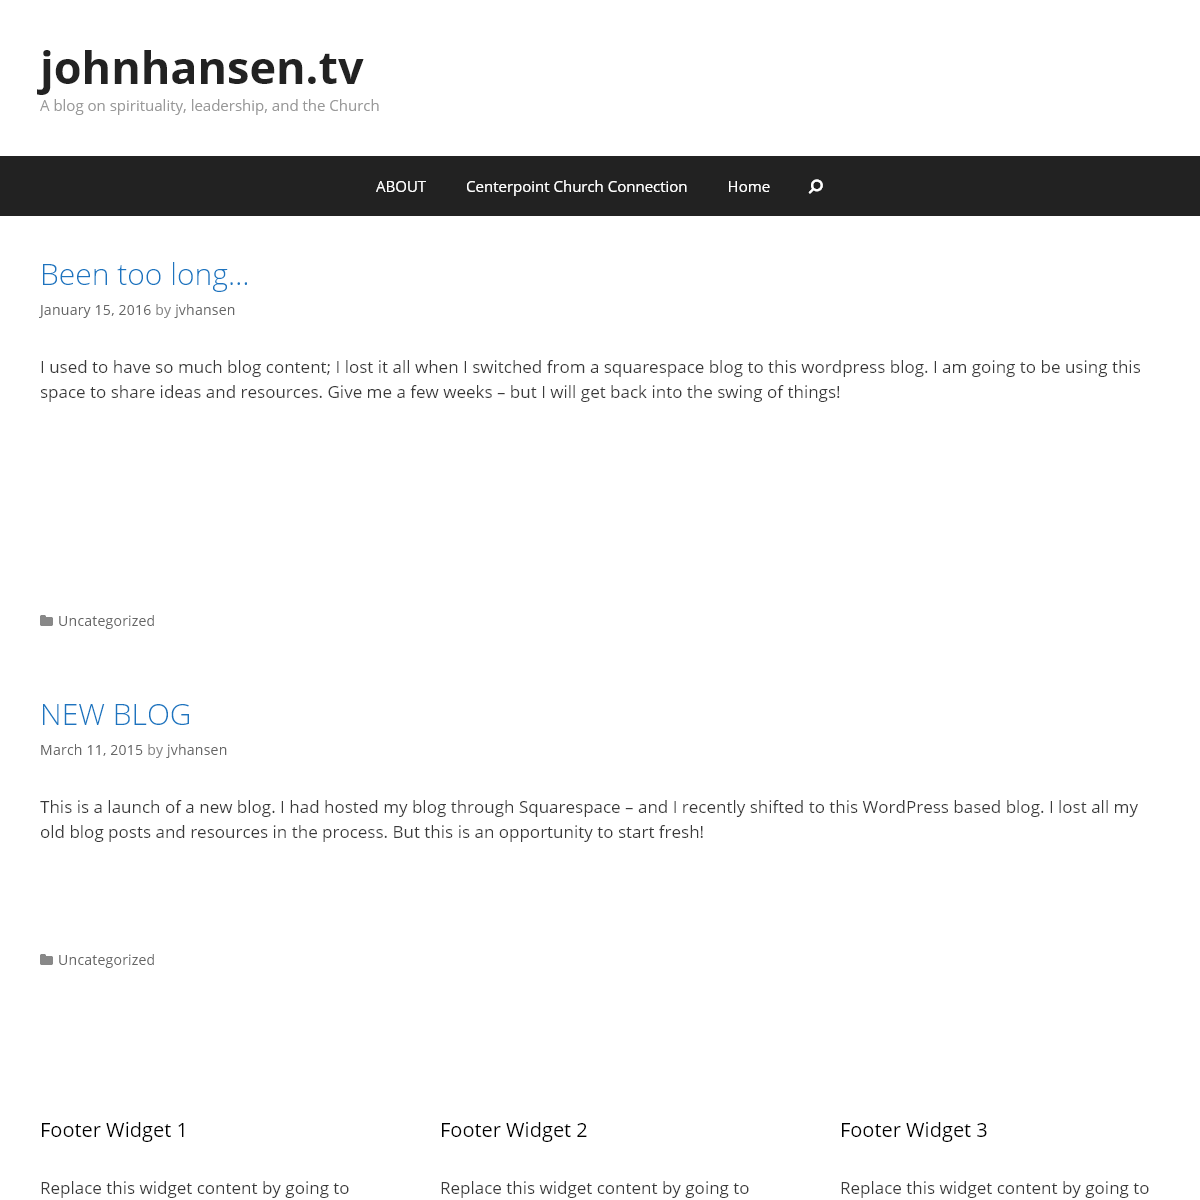 A complete backup of johnhansen.tv